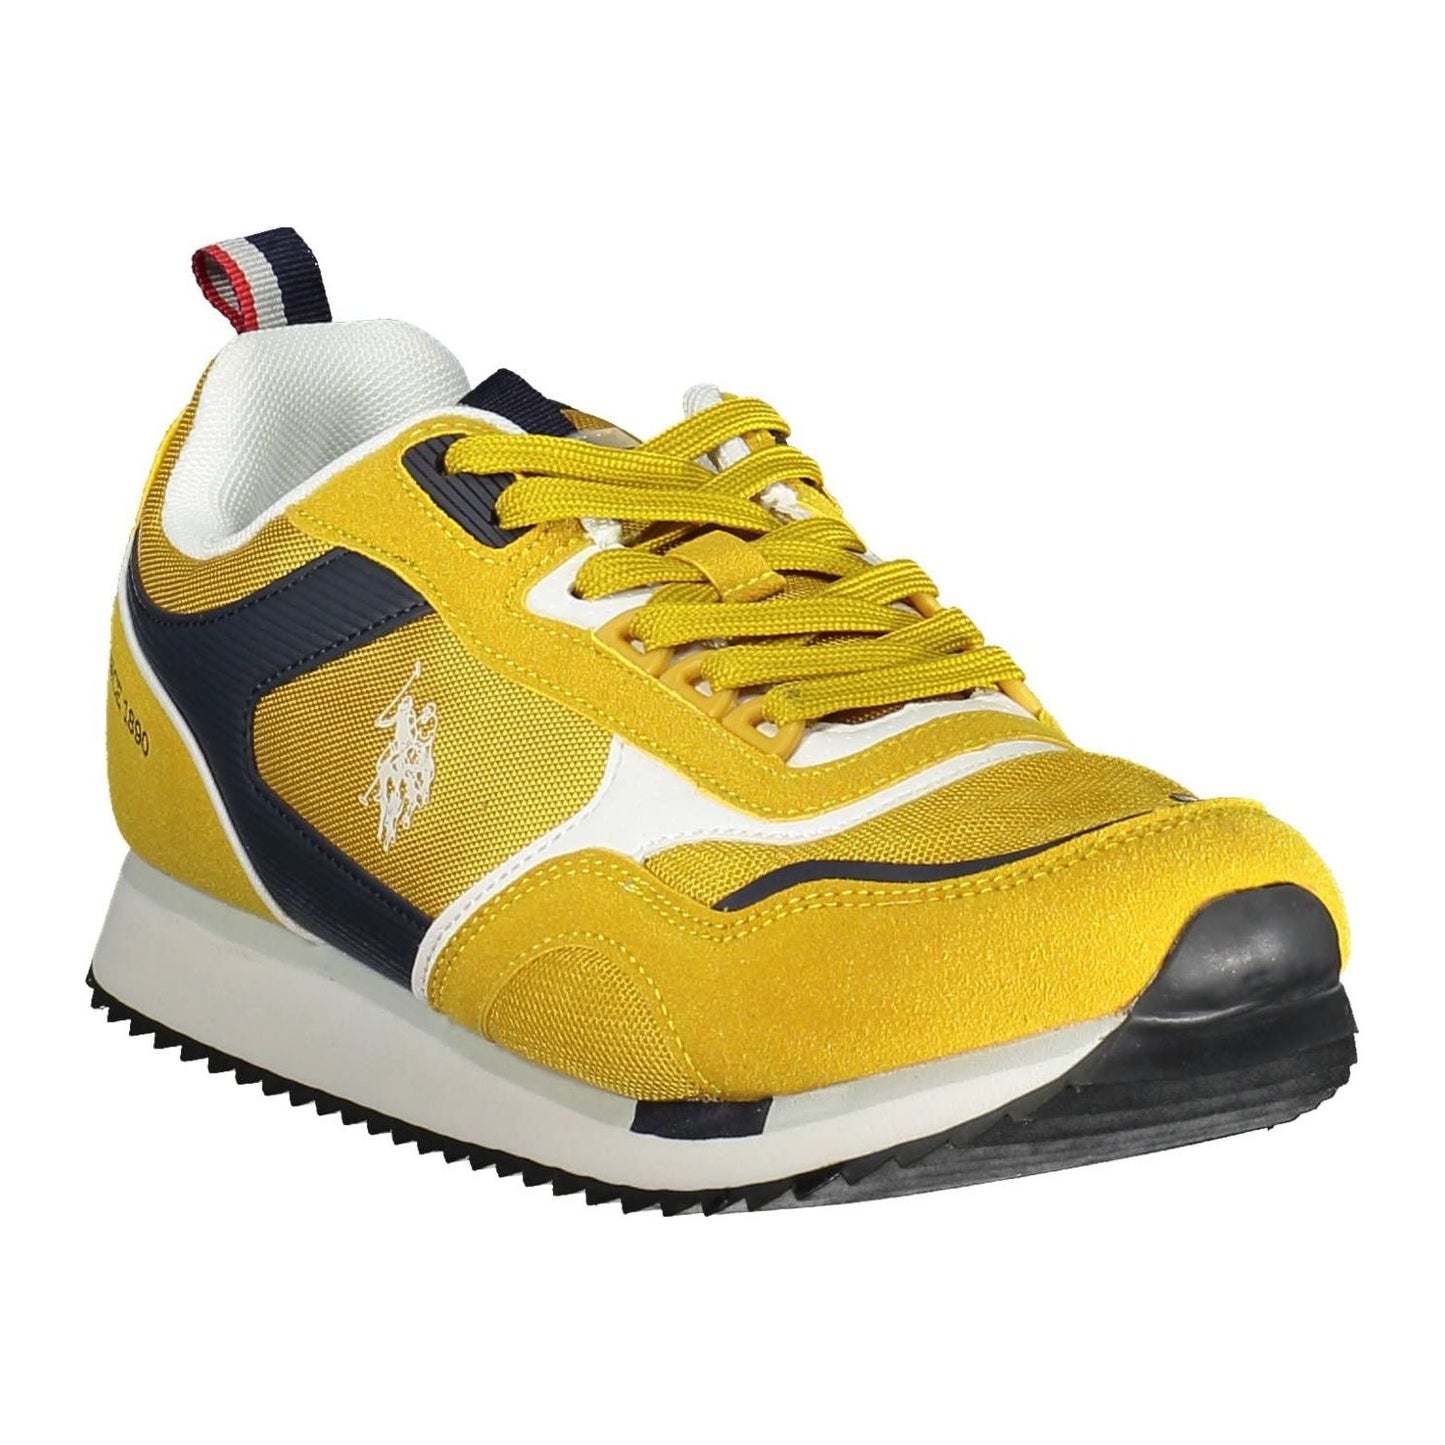 U.S. POLO ASSN. Dashing Yellow Lace-Up Sports Sneakers dashing-yellow-lace-up-sports-sneakers